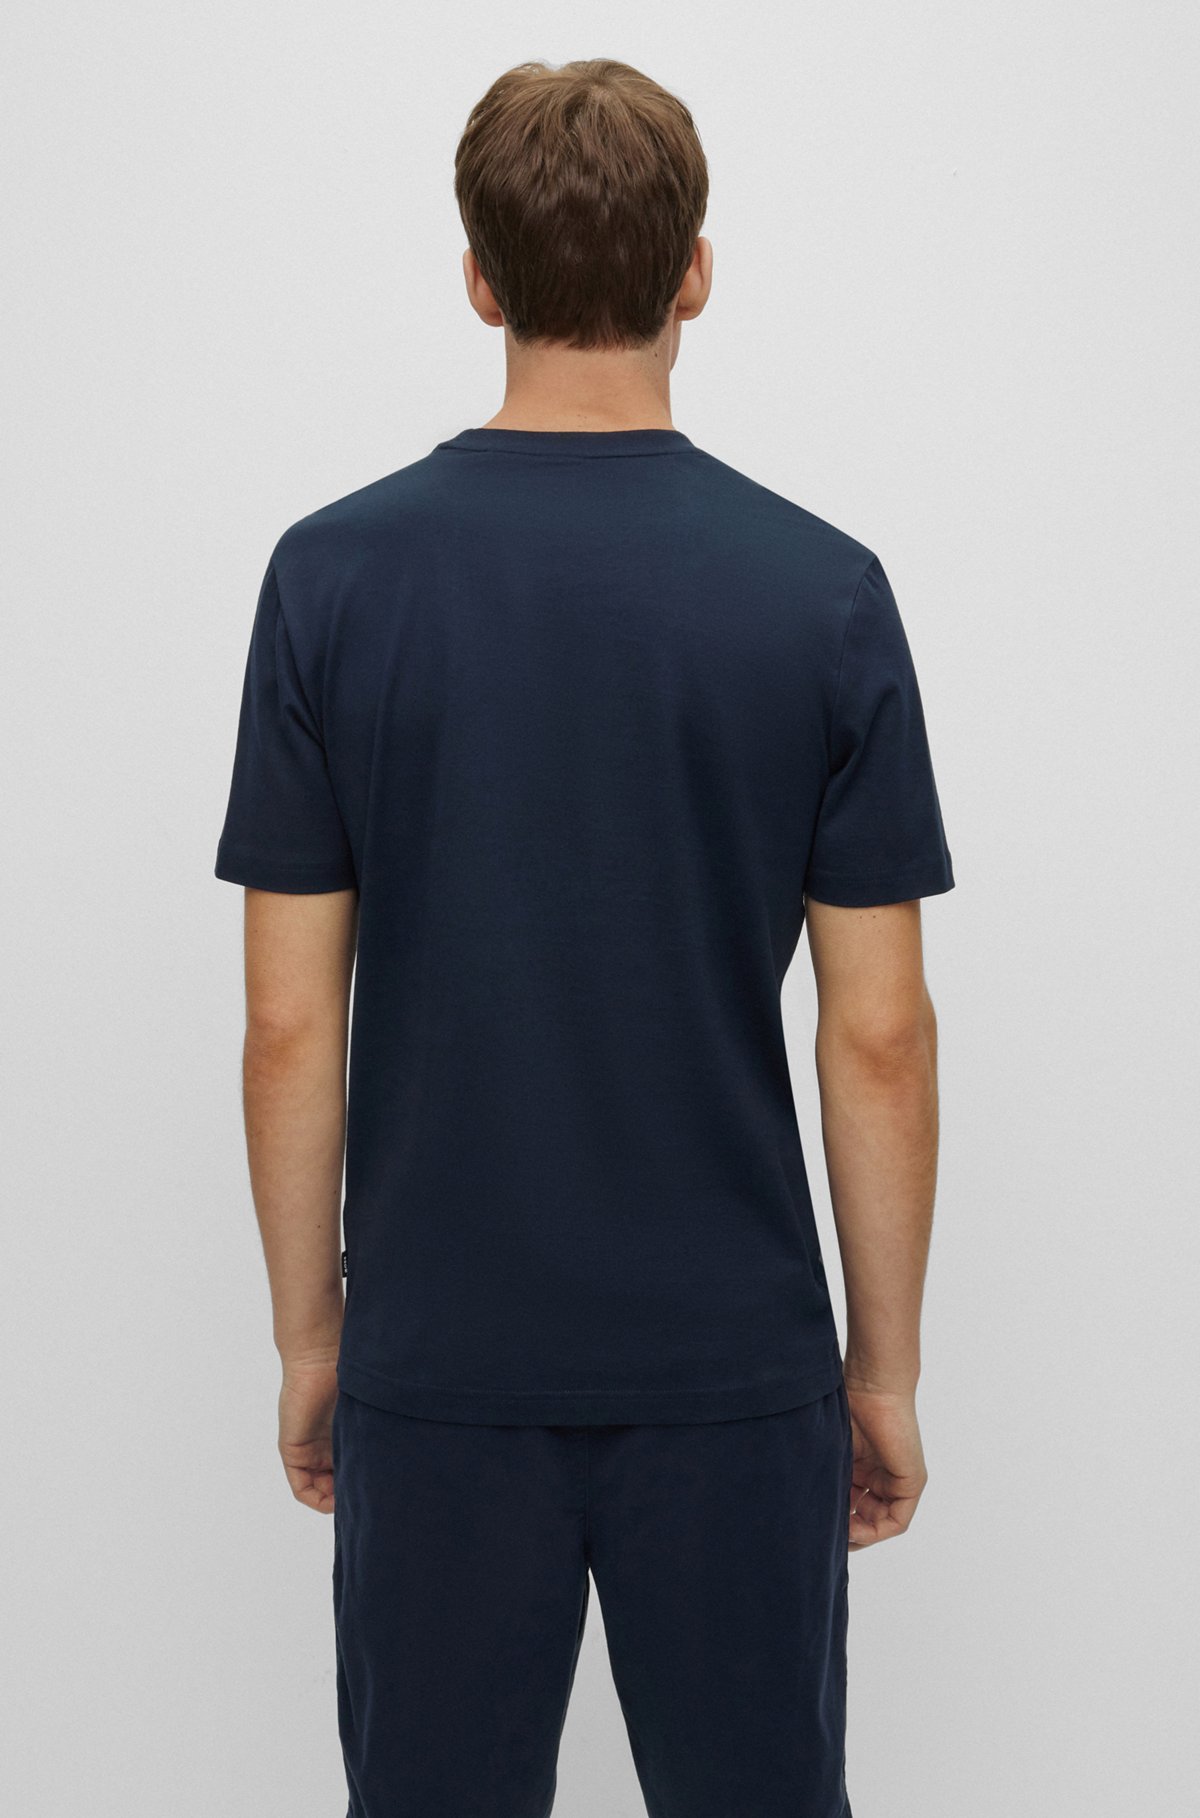 Cotton-jersey T-shirt with signature-stripe logo print, Dark Blue